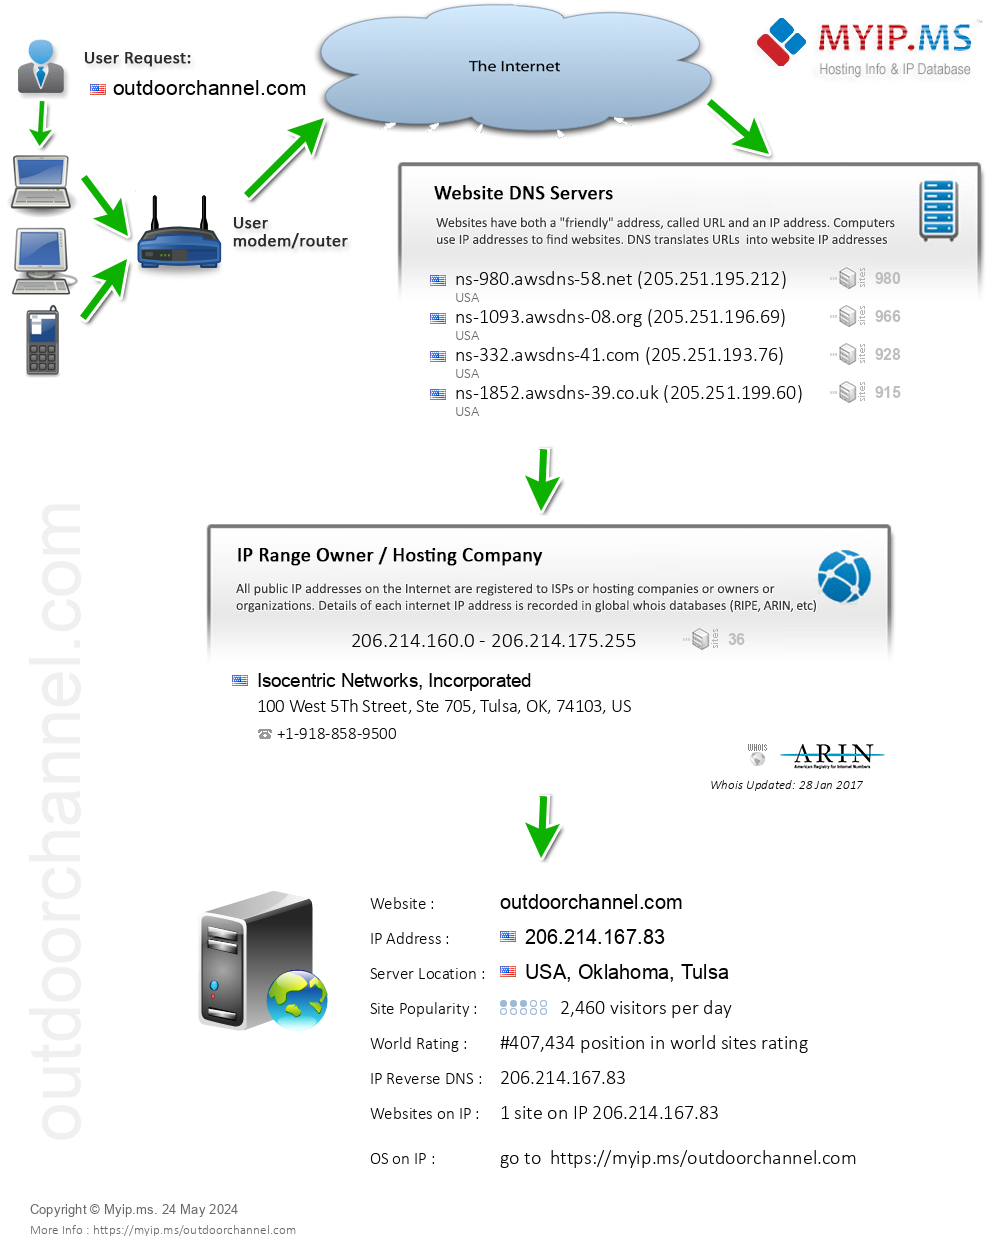 Outdoorchannel.com - Website Hosting Visual IP Diagram